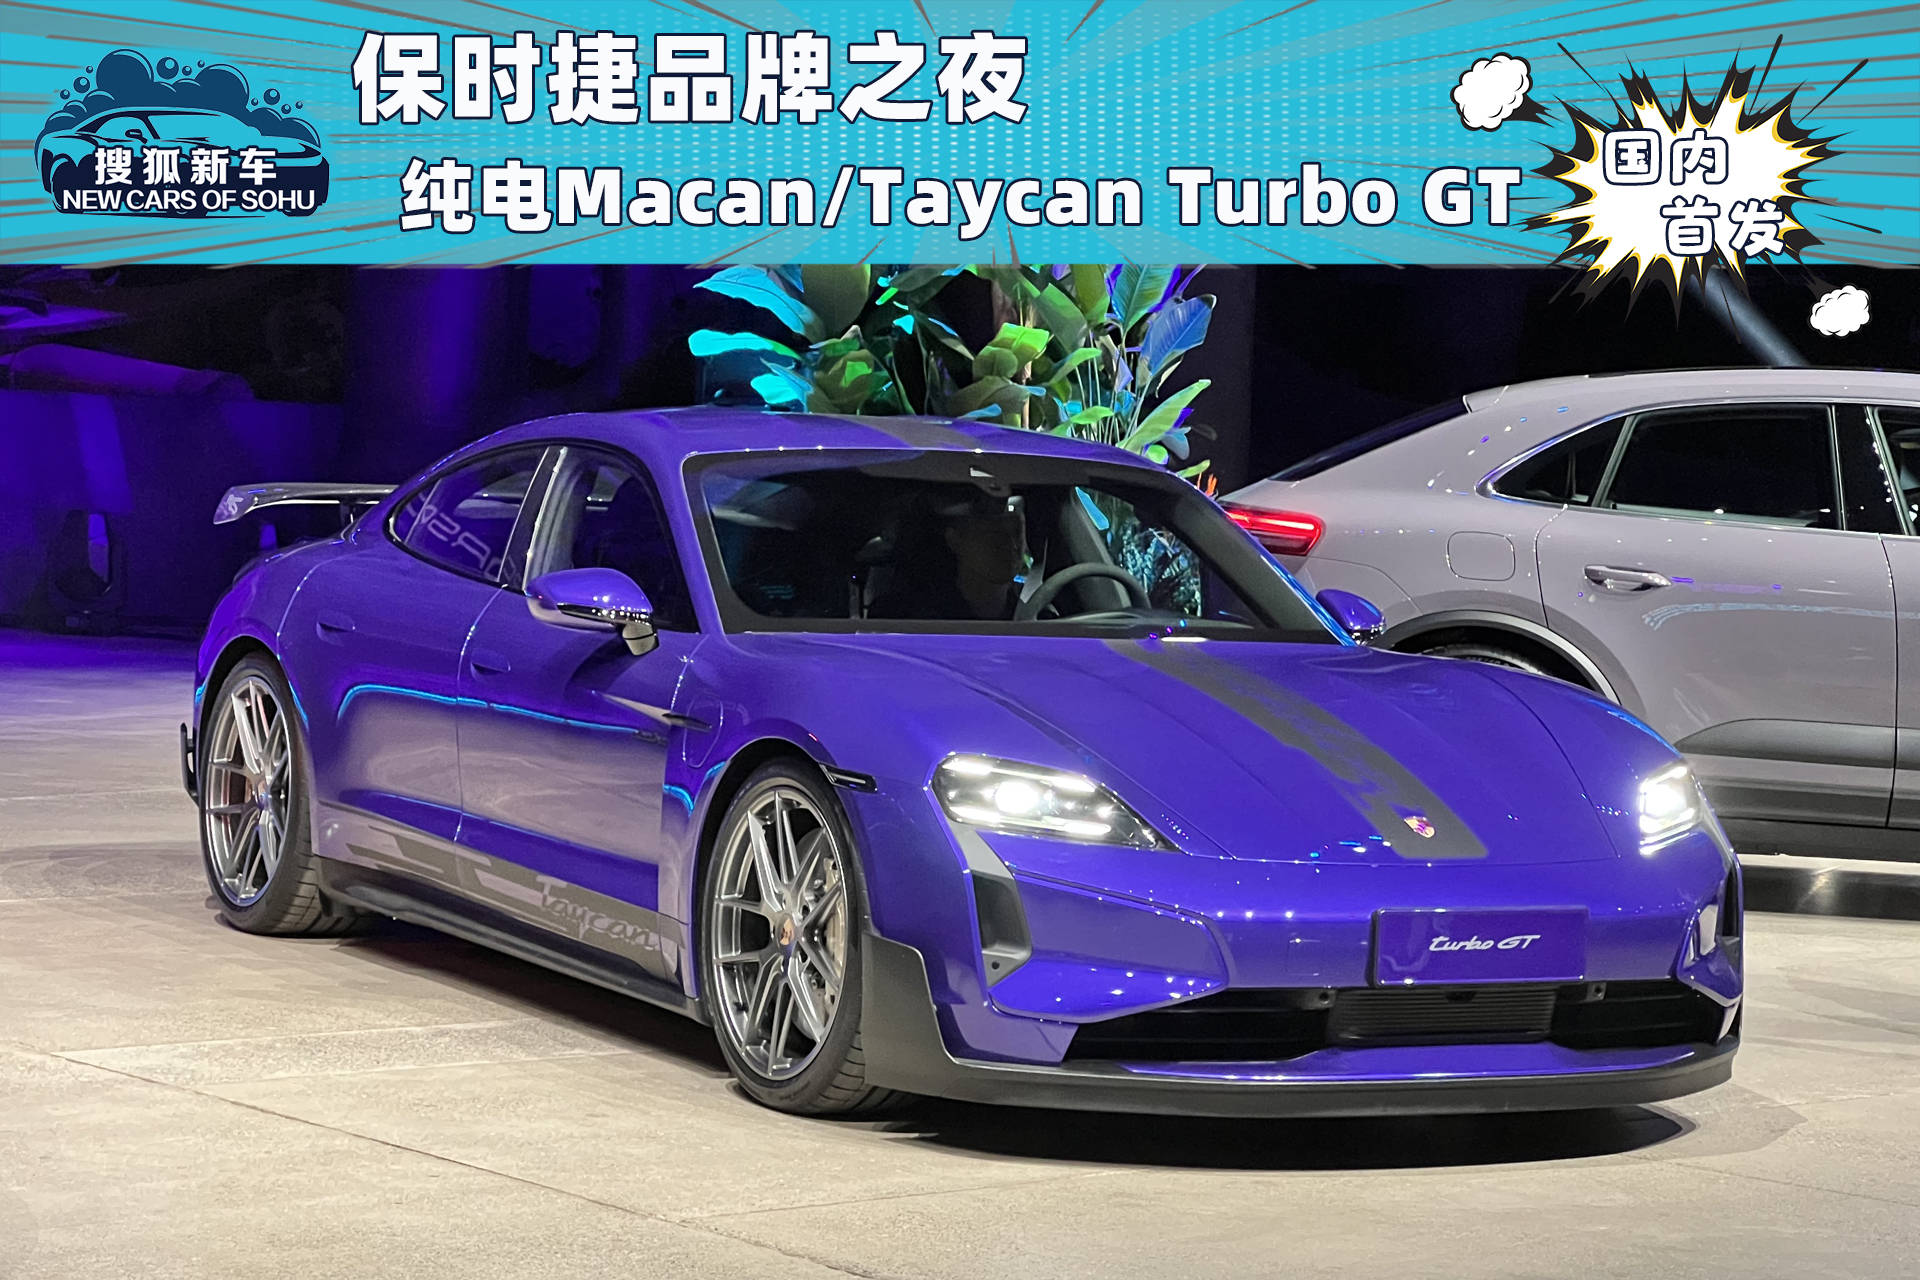 保时捷品牌之夜:纯电动Macan/Taycan Turbo GT中国首秀_搜狐汽车_搜狐汽车。com